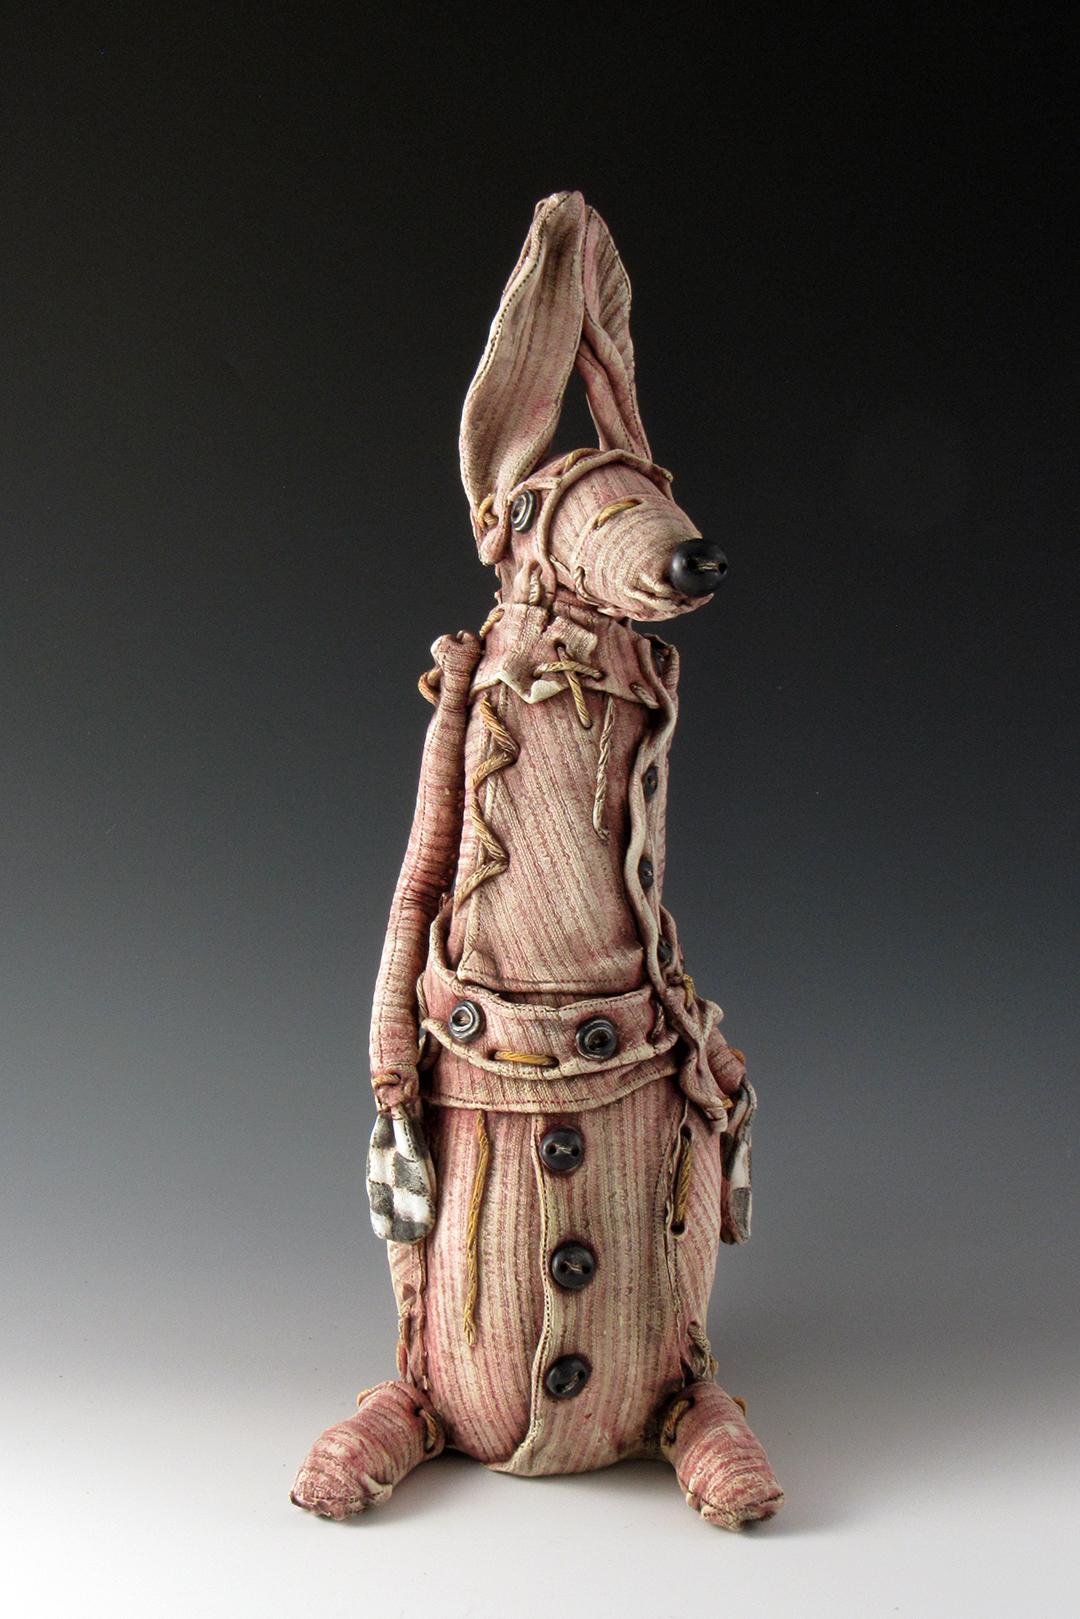 Keith Schneider Figurative Sculpture - "SYLVIA" - trompe l'oeil ceramic sculpture of rabbit resembles outsider art